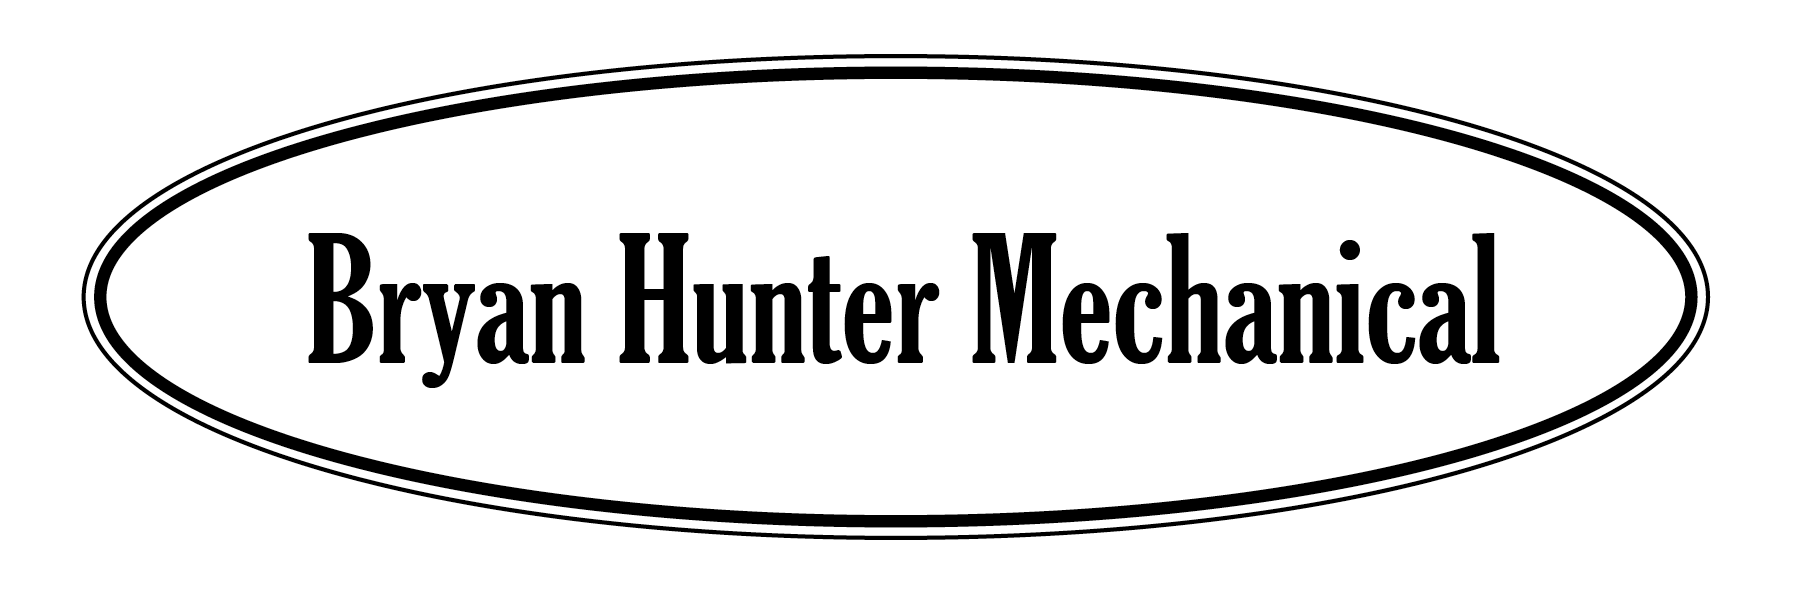 Bryan Hunter Mechanical